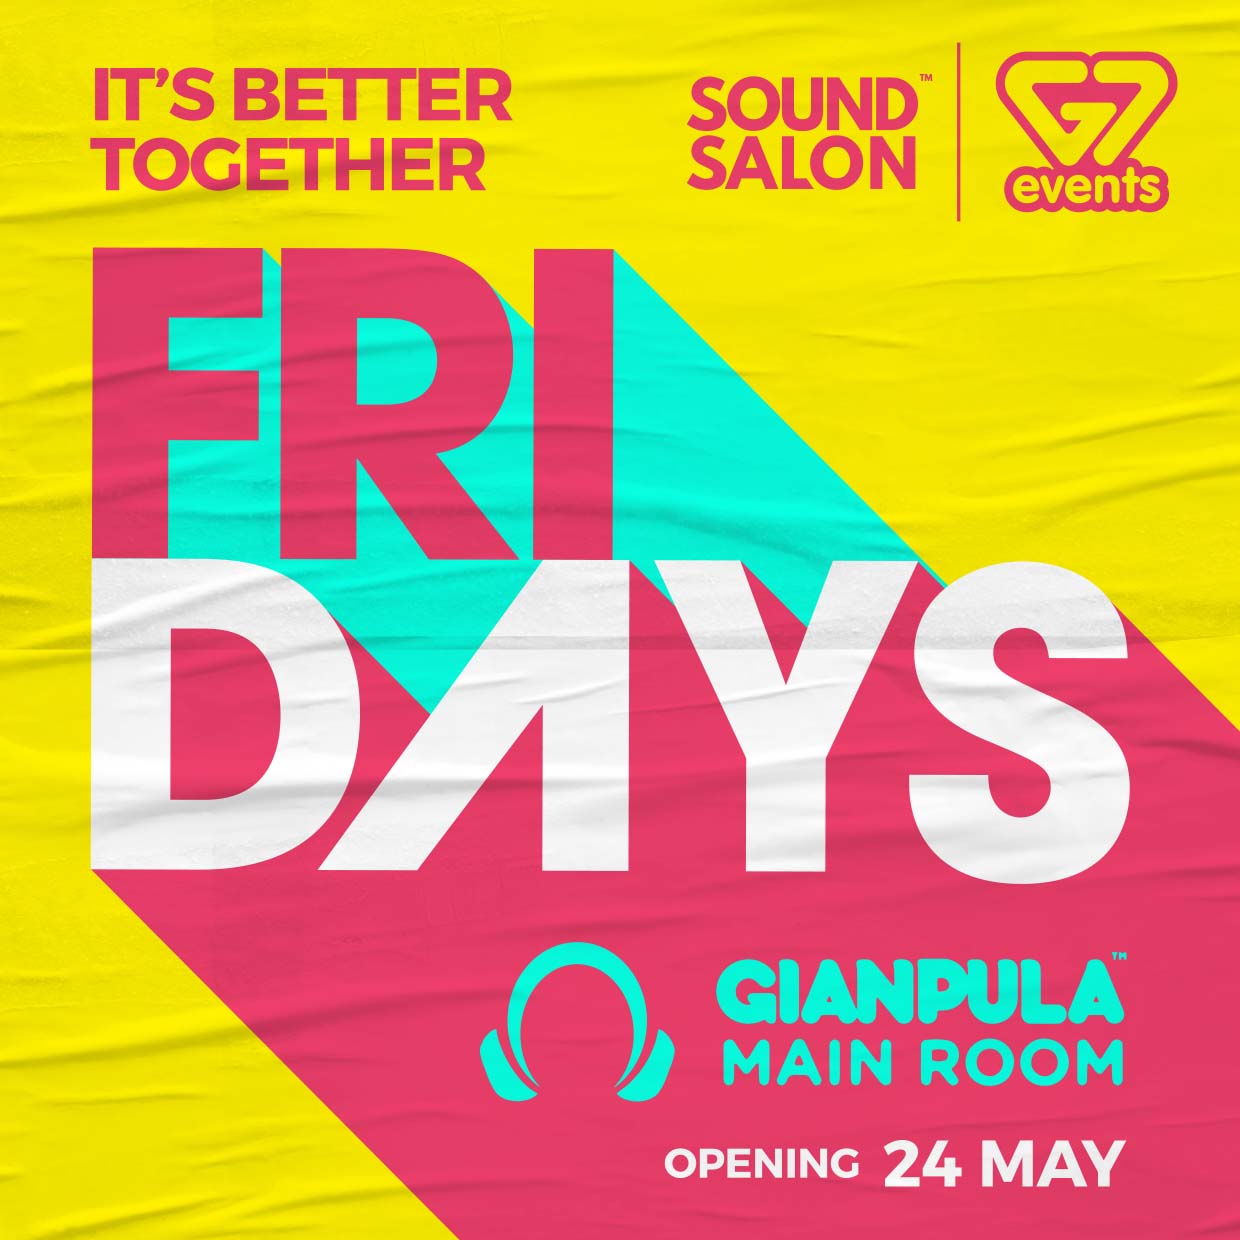 G7 Events & Sound Salon - Fridays poster